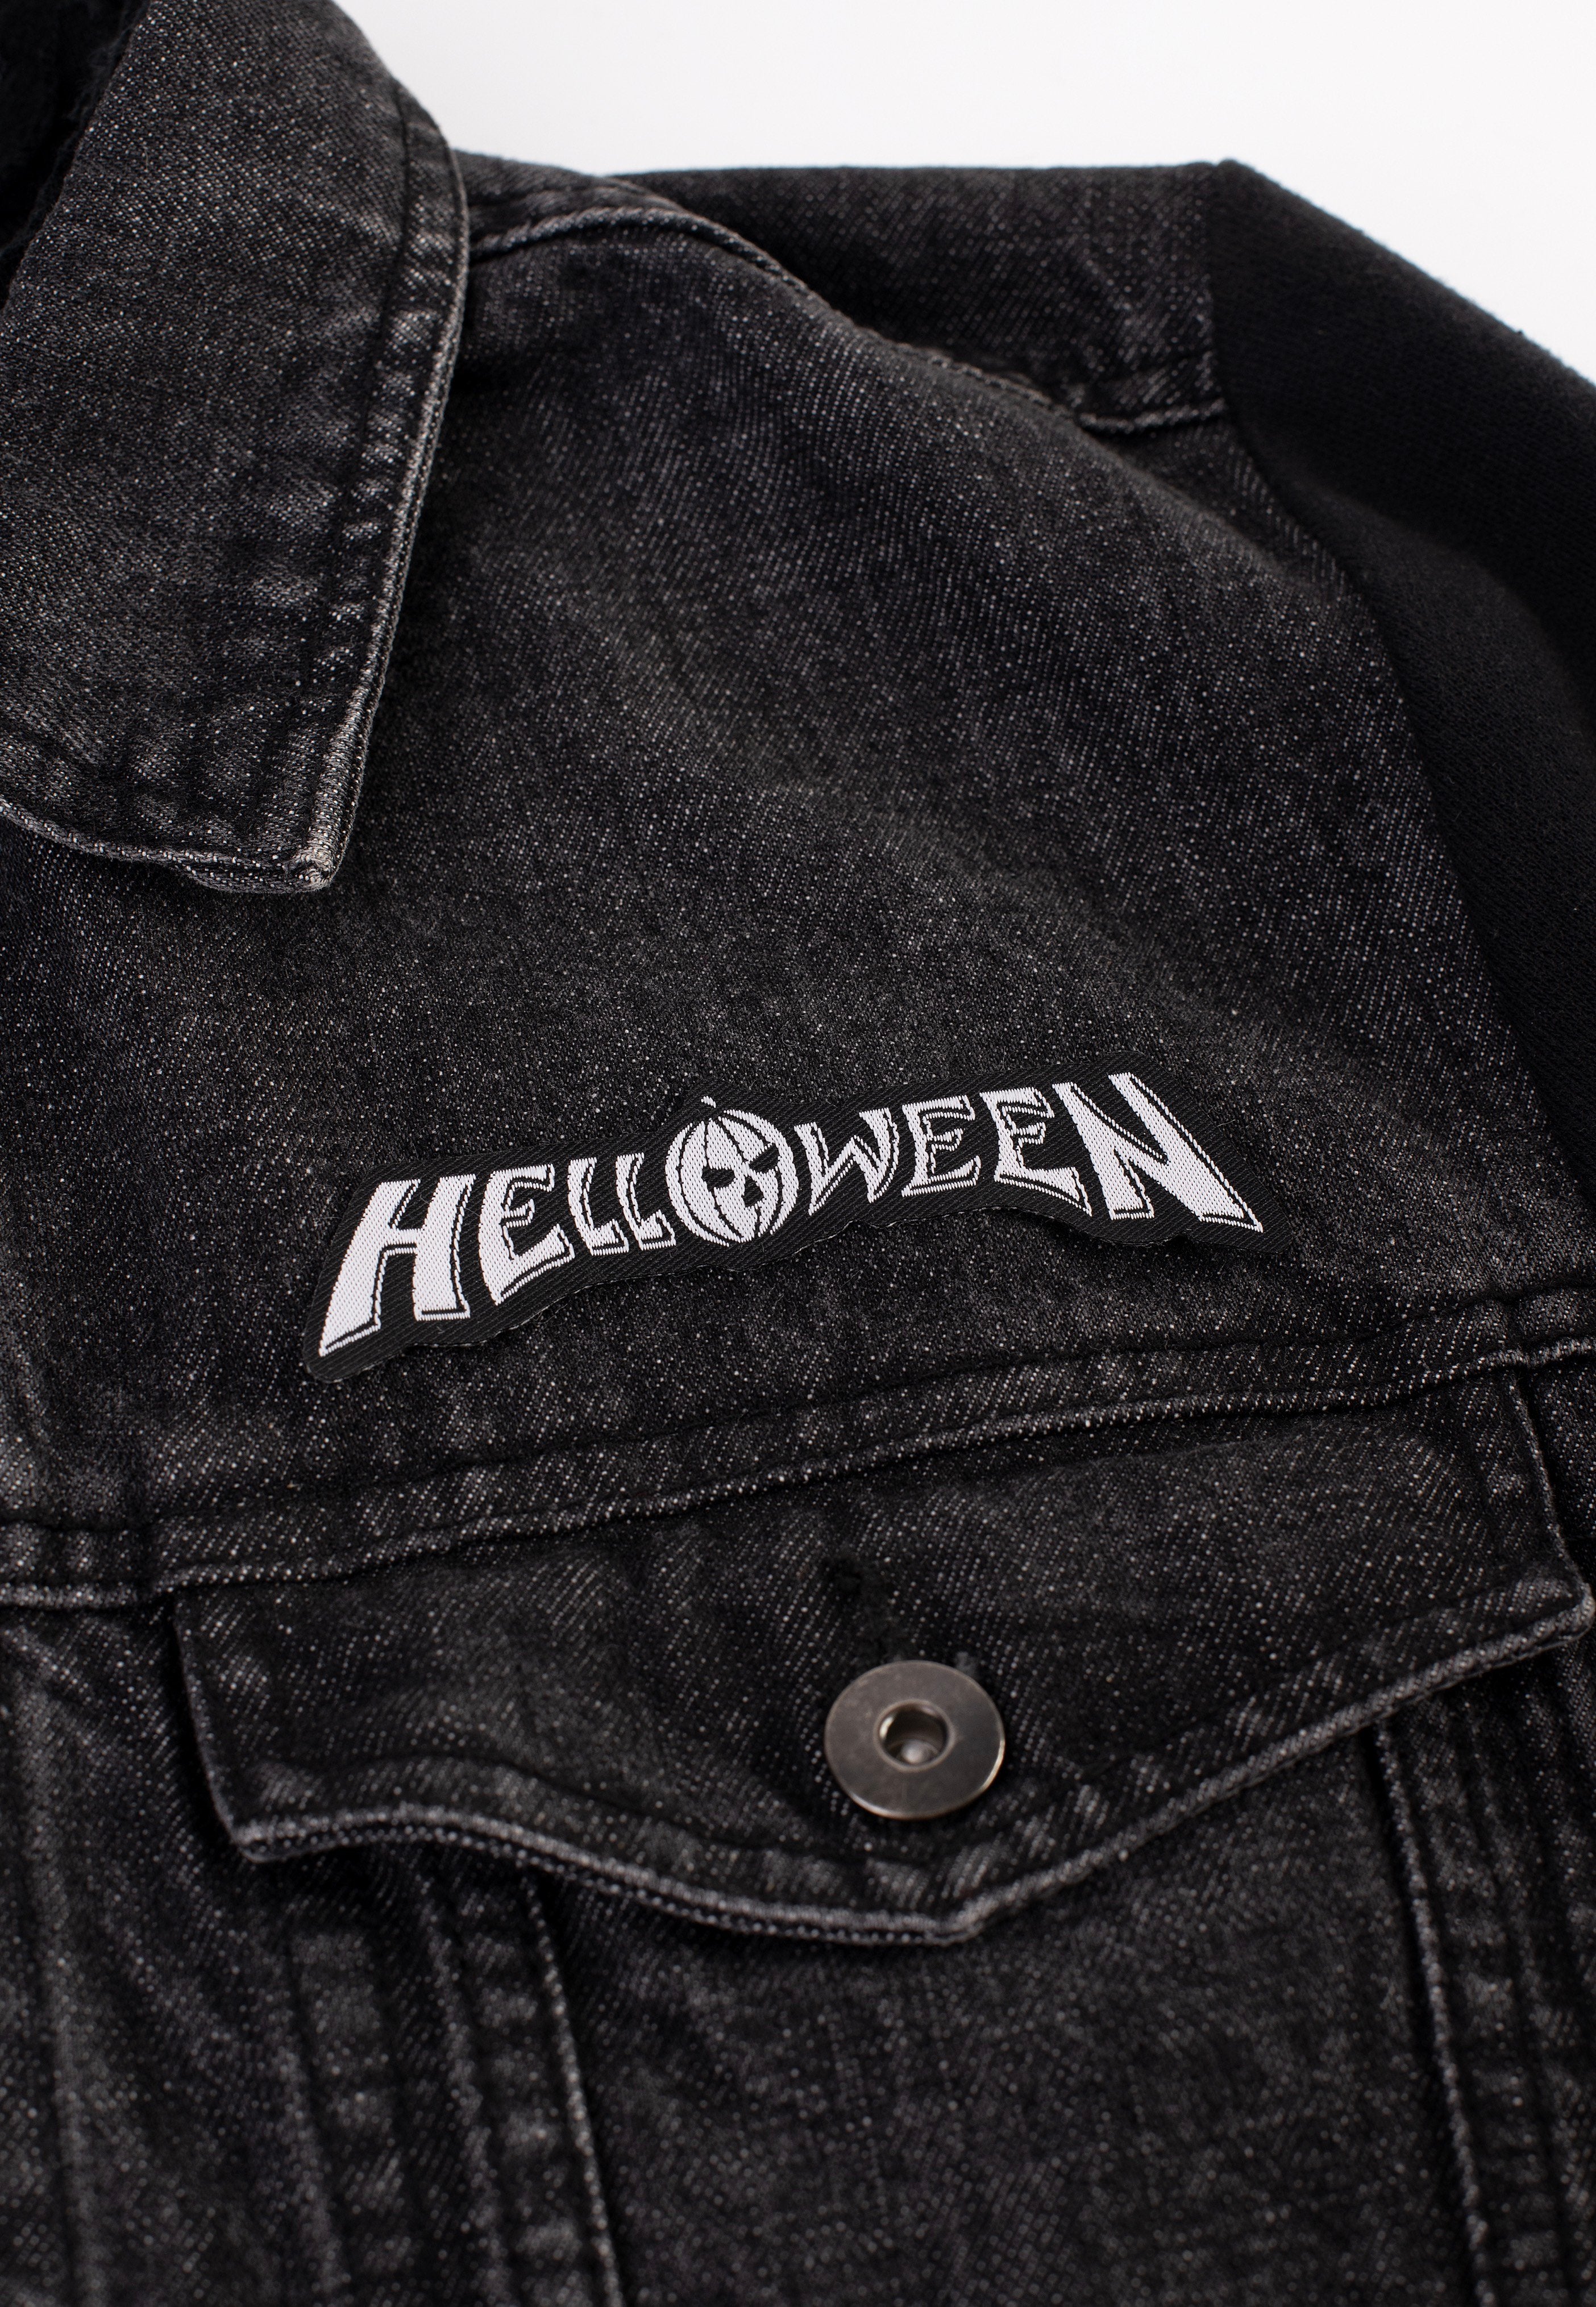 Helloween - Logo Cut Out - Patch